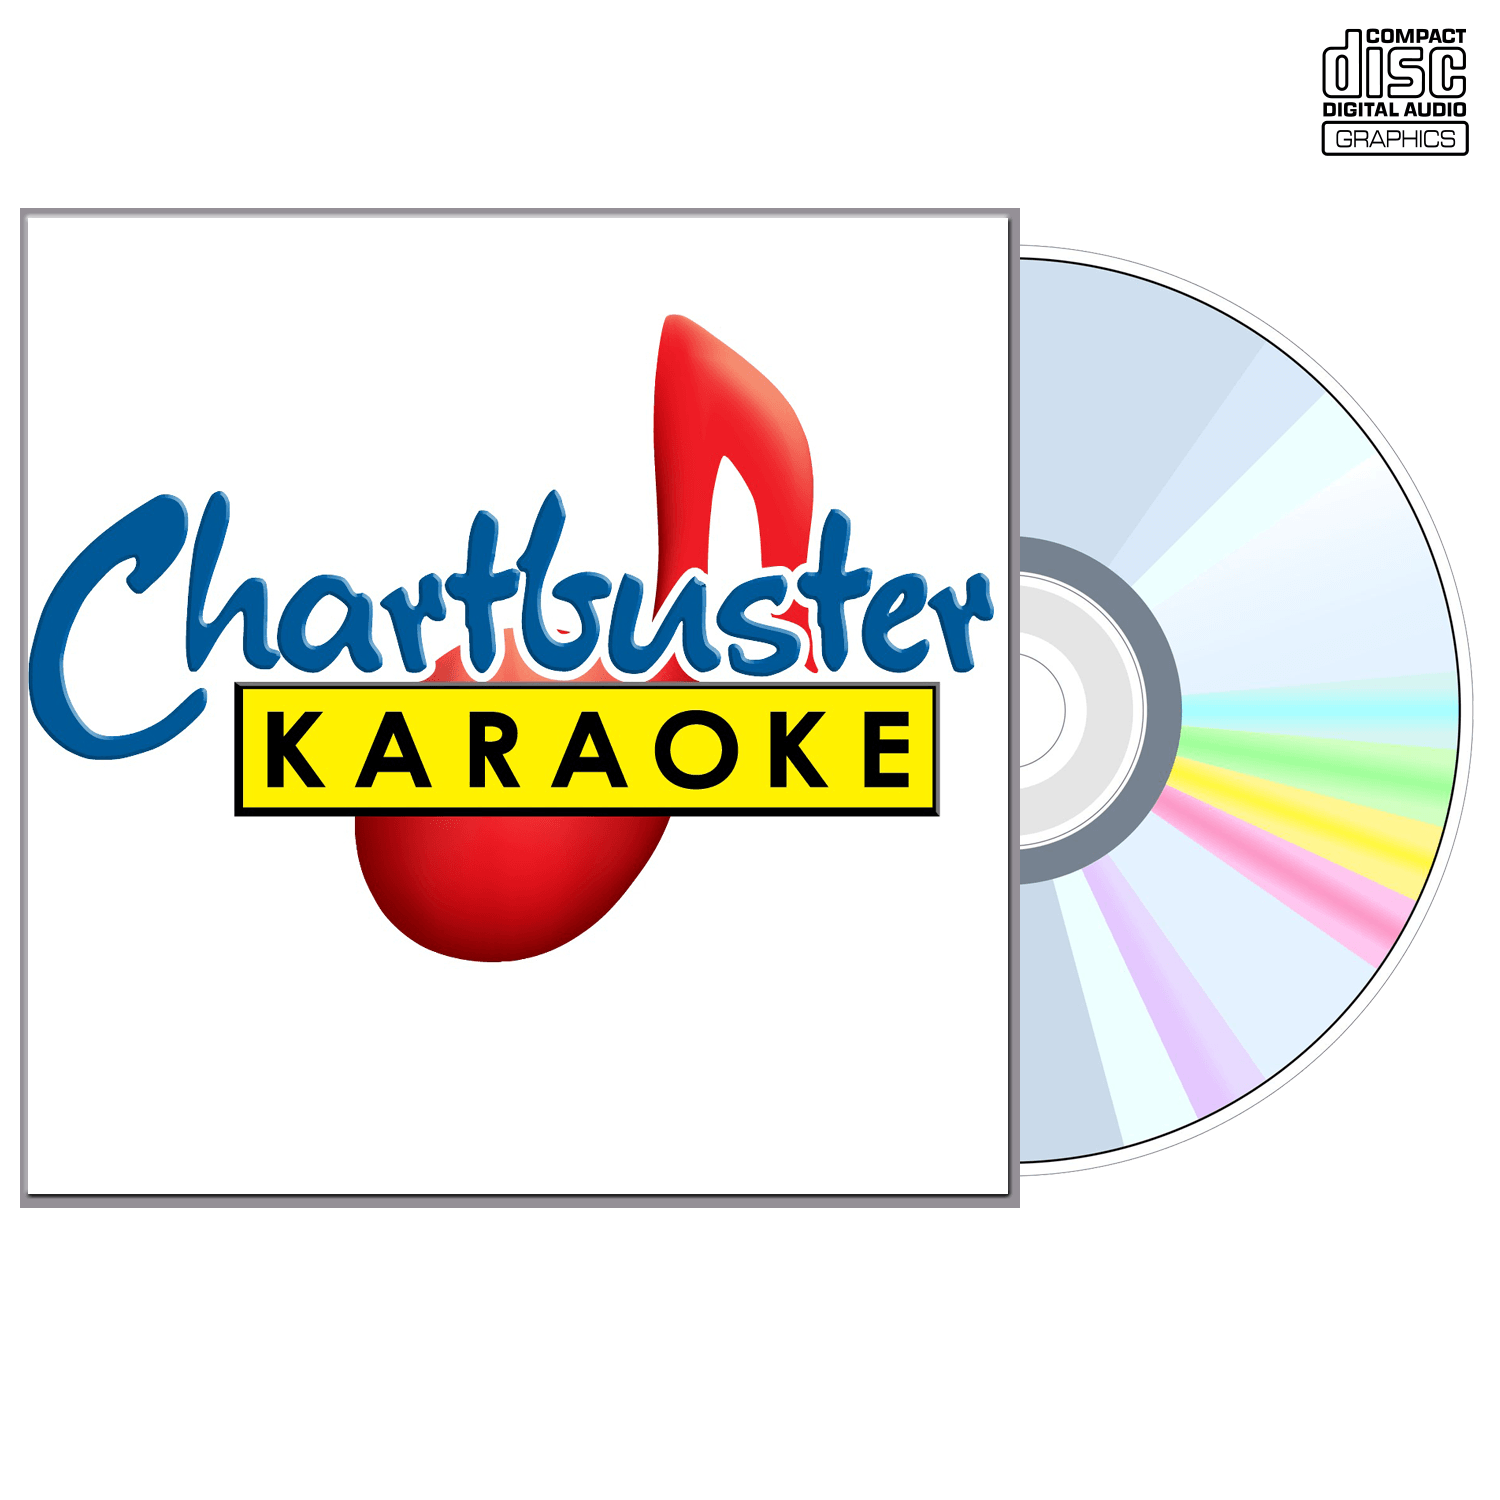 Best Of George Jones - CD+G - Chartbuster Karaoke - Karaoke Home Entertainment